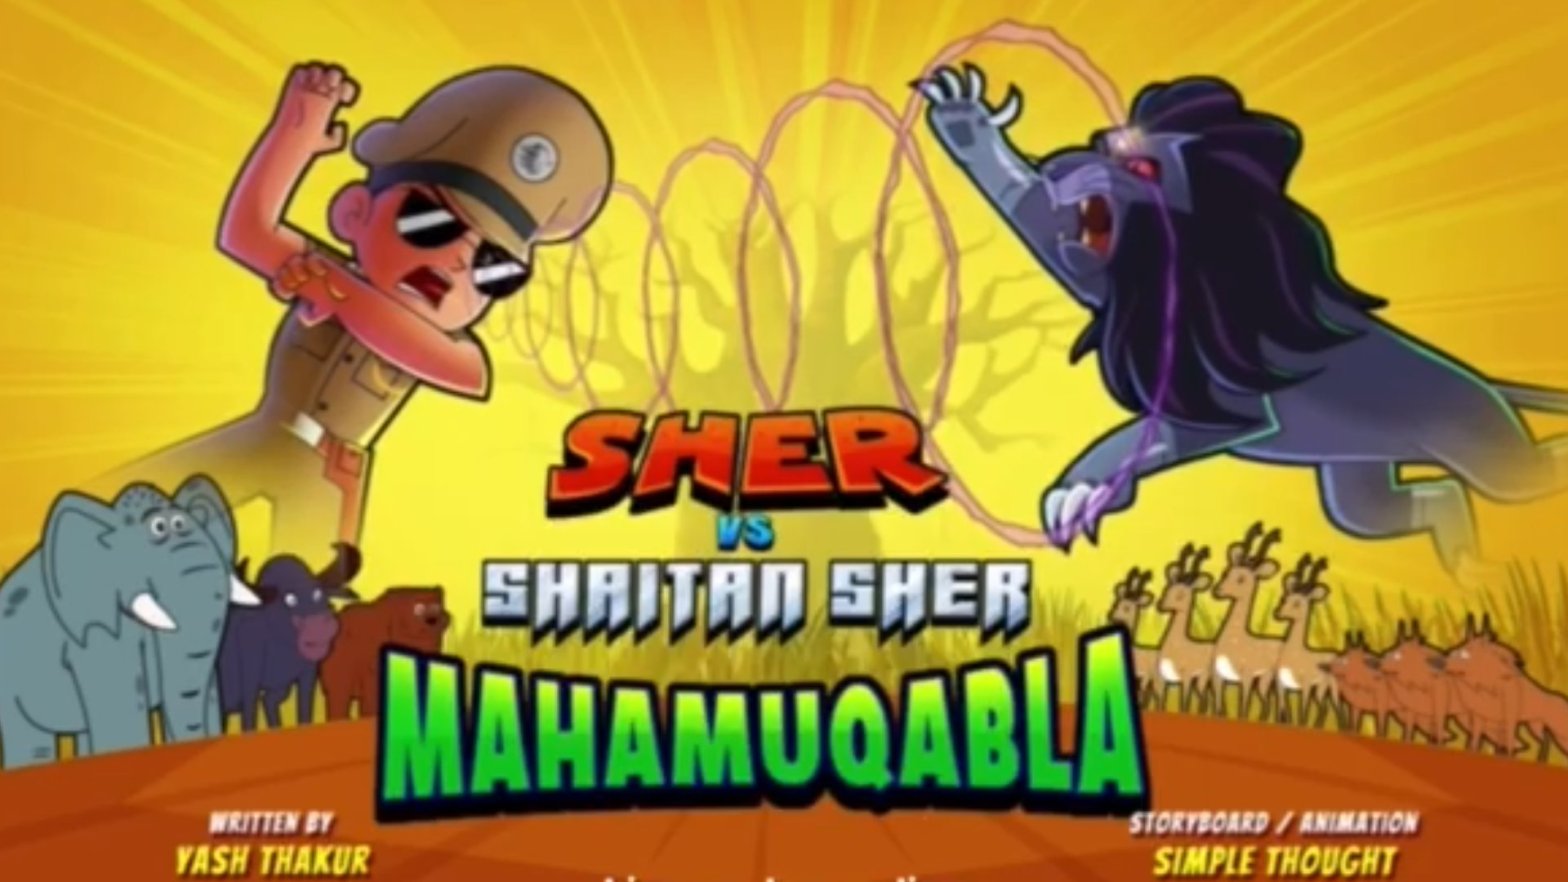 Little Singham Sher Vs Shaitan Sher Mahamuqabla 720p HD Part 1 – Cartoon  Tooner